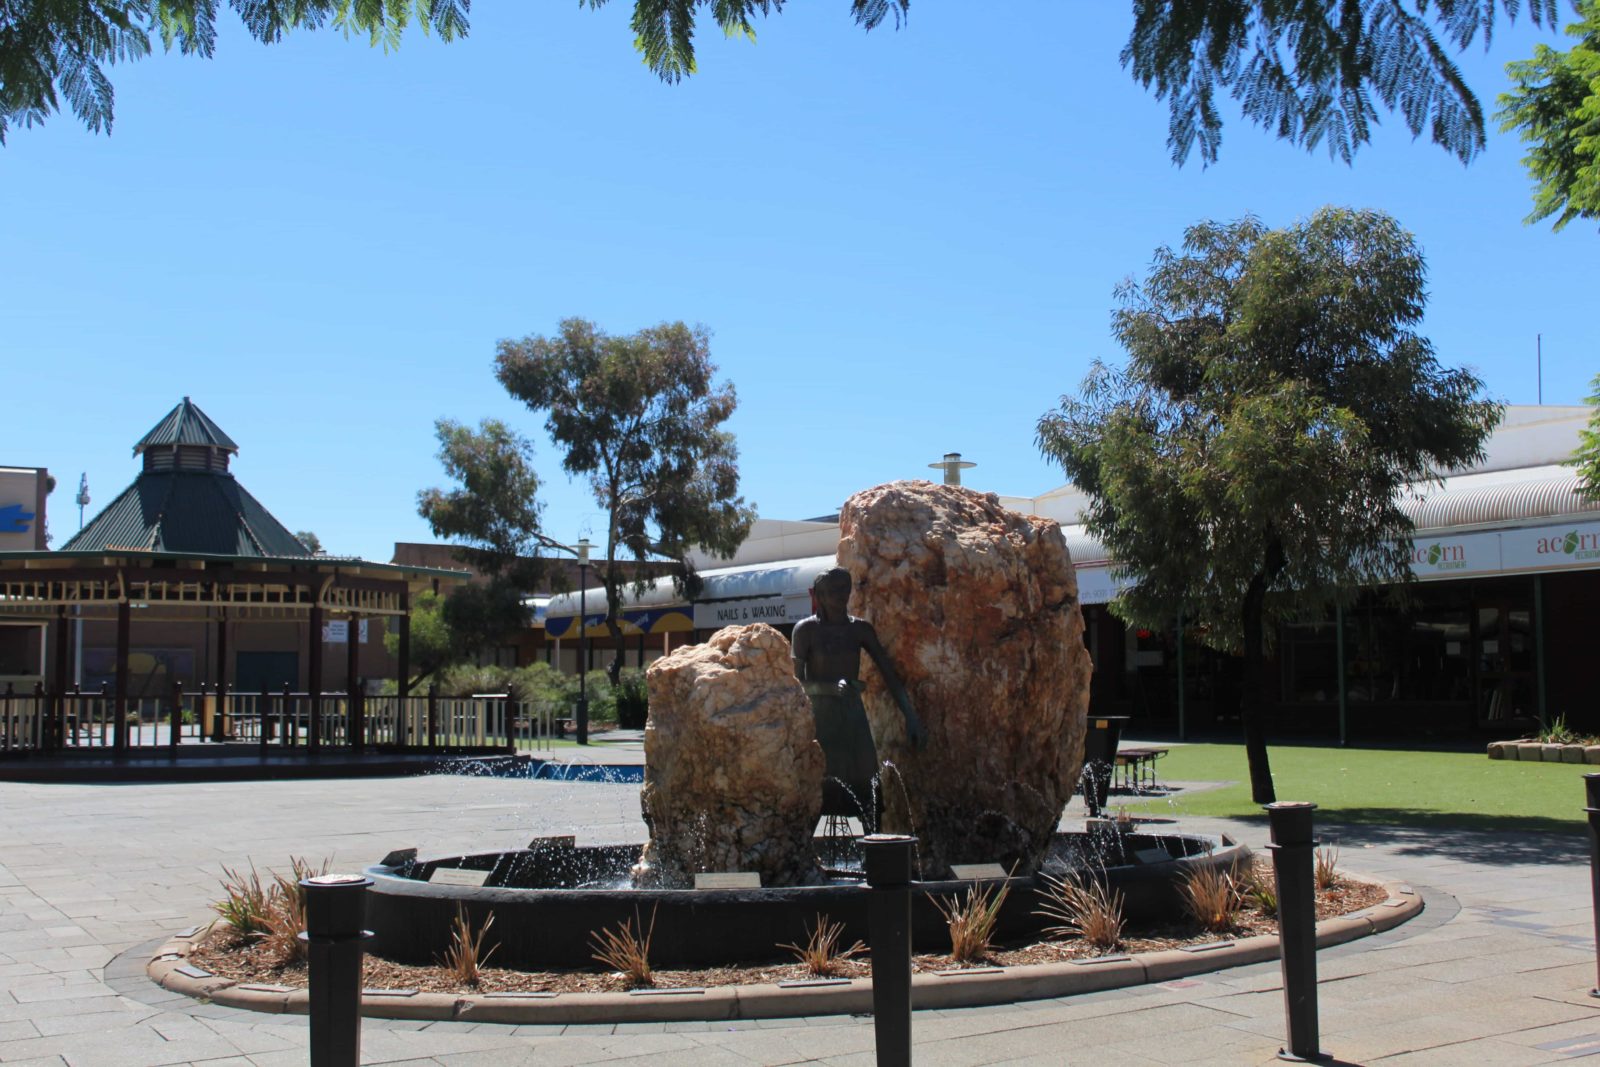 St Barbara Monument and Statue, Kalgoorlie, Western Australia